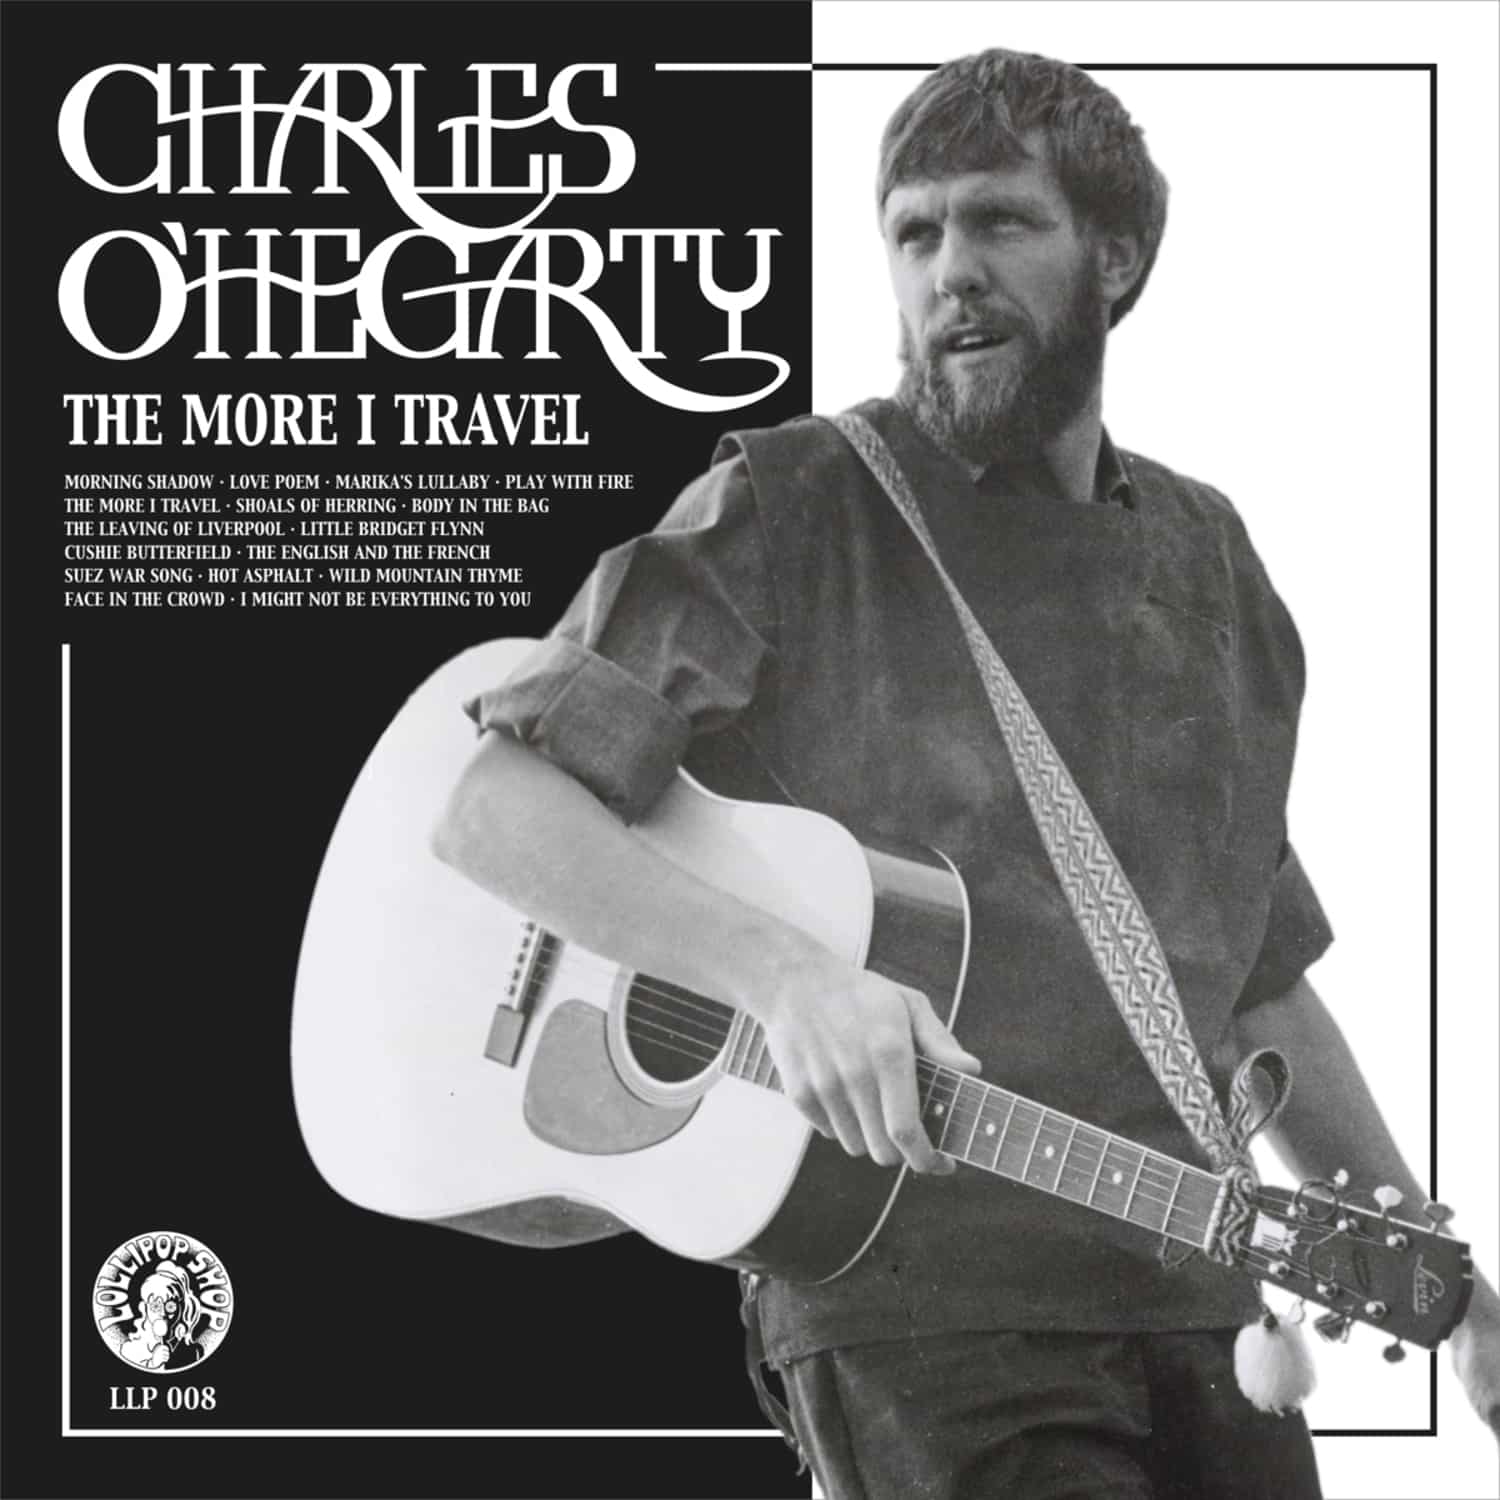  Charles O Hegarty - THE MORE I TRAVEL 